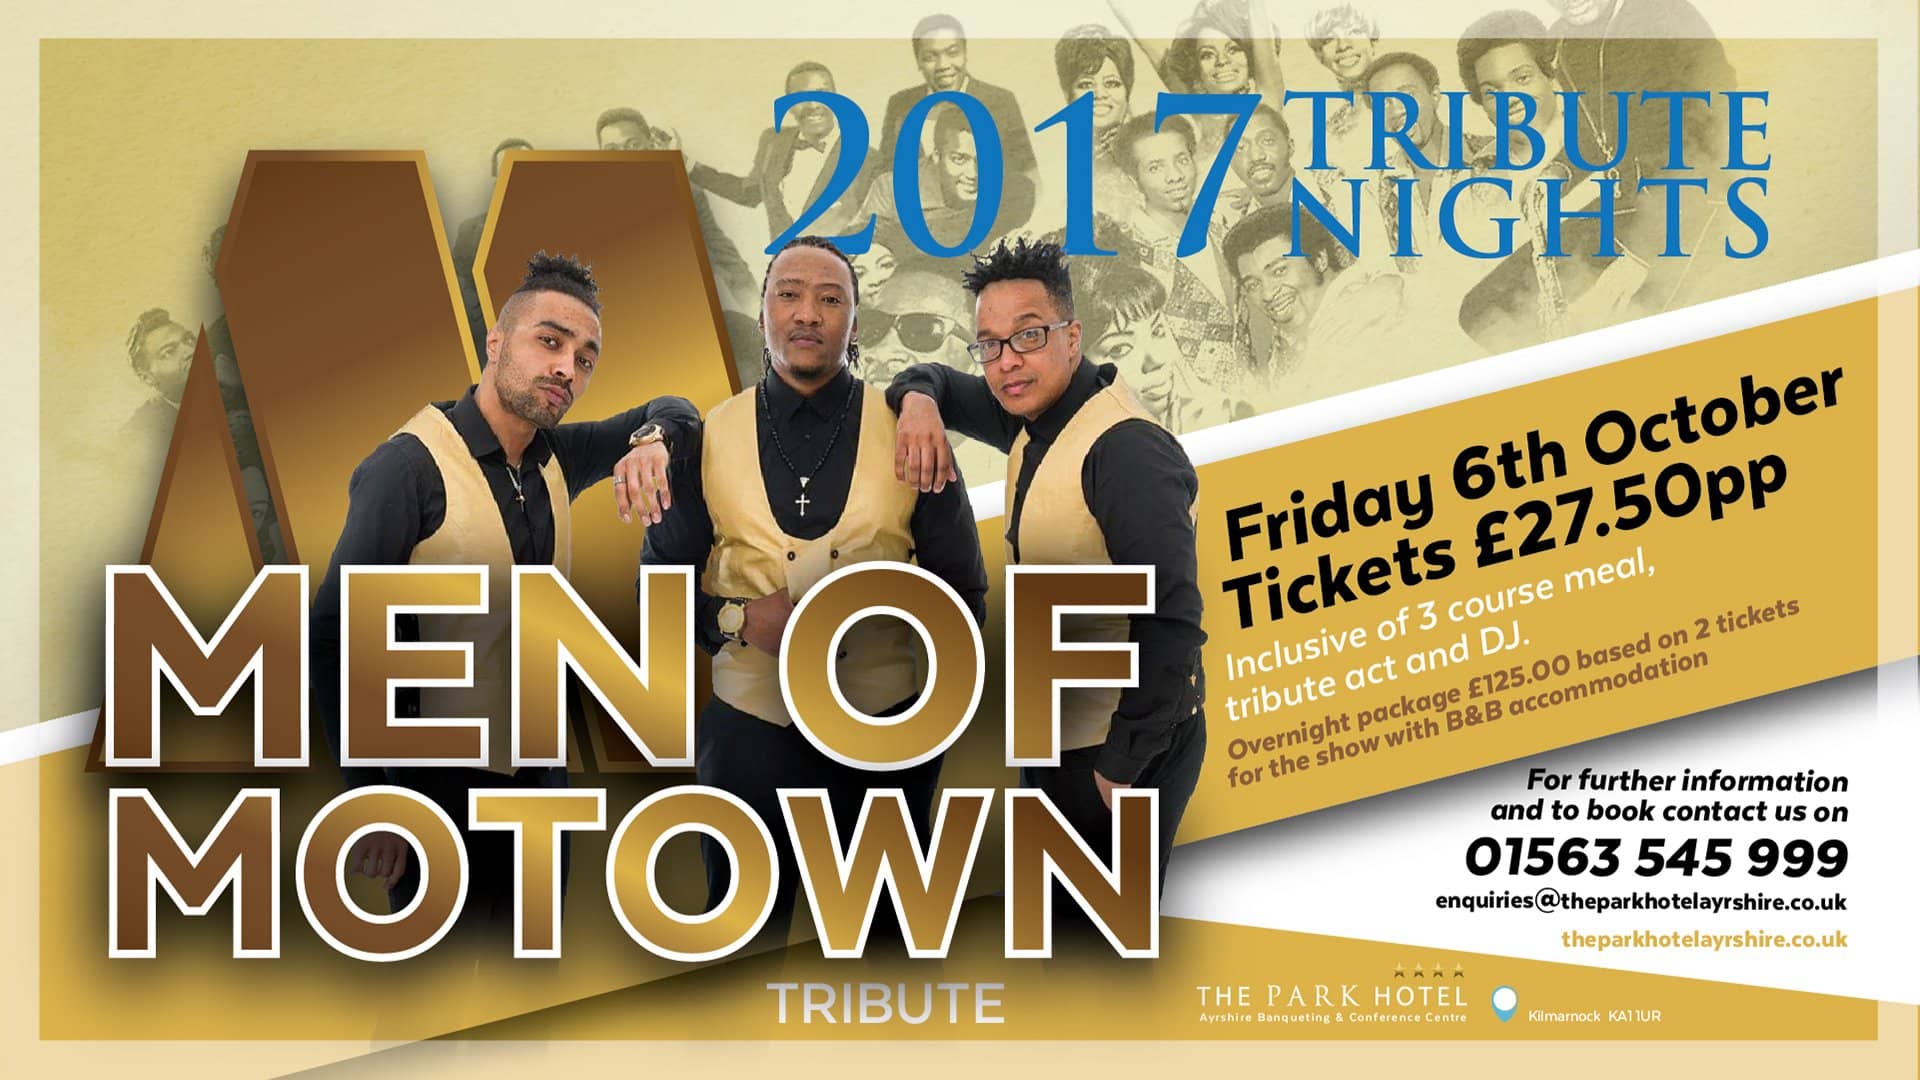 Men Of Motown Tribute Night - Fri 6th October